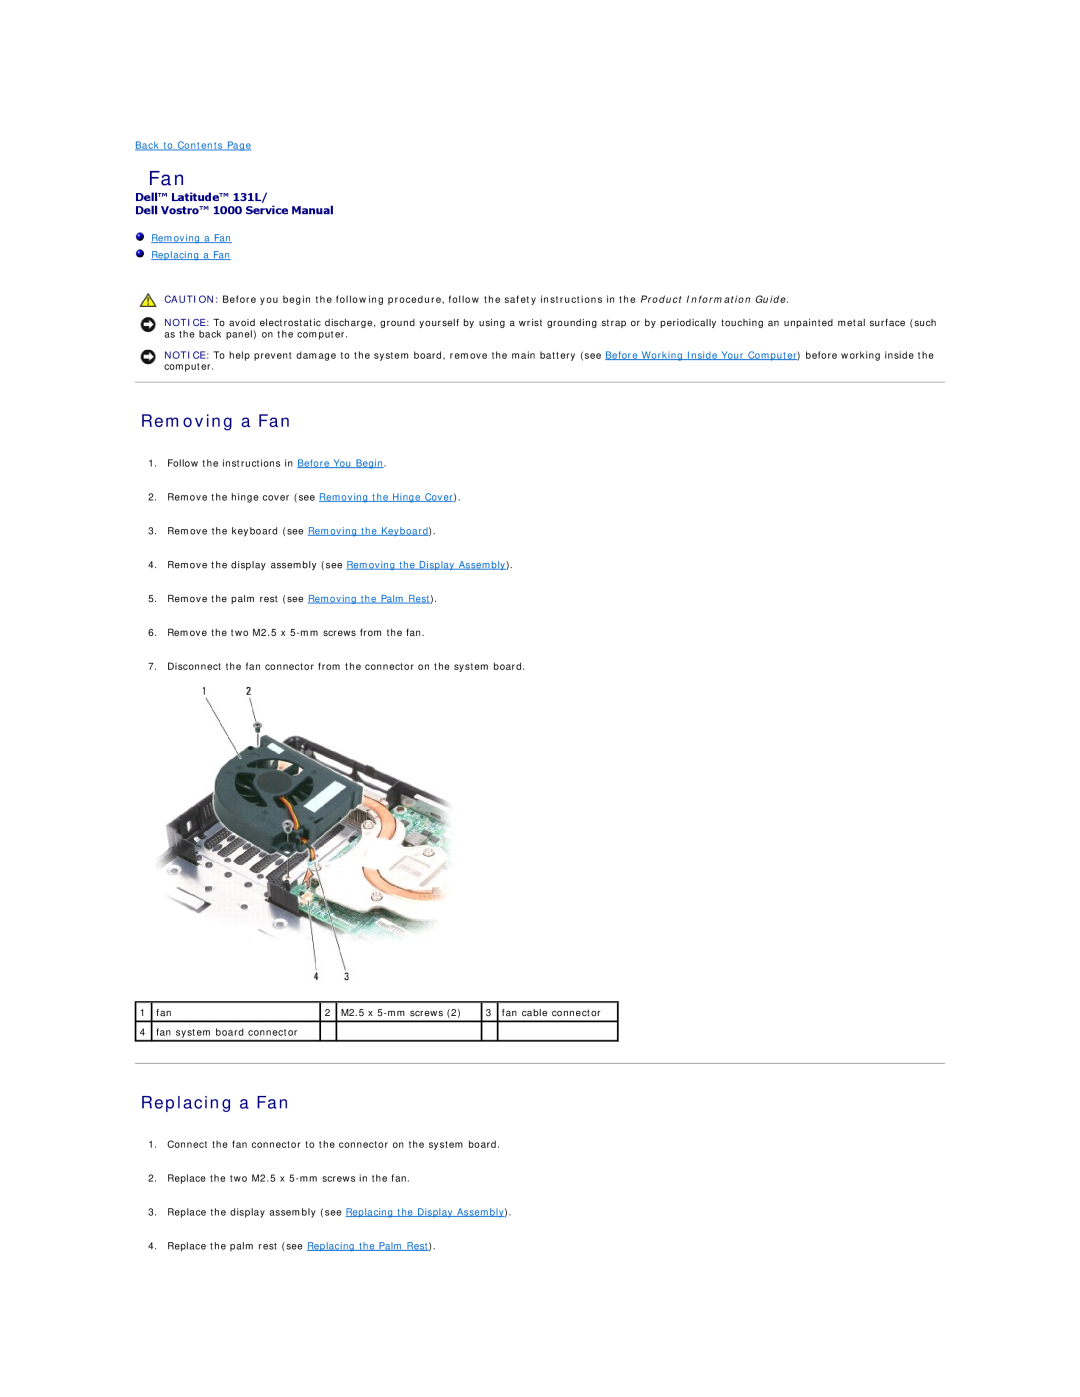 Dell Removing a Fan Replacing a Fan, Dell Latitude 131L Dell Vostro 1000 Service Manual, Back to Contents Page 